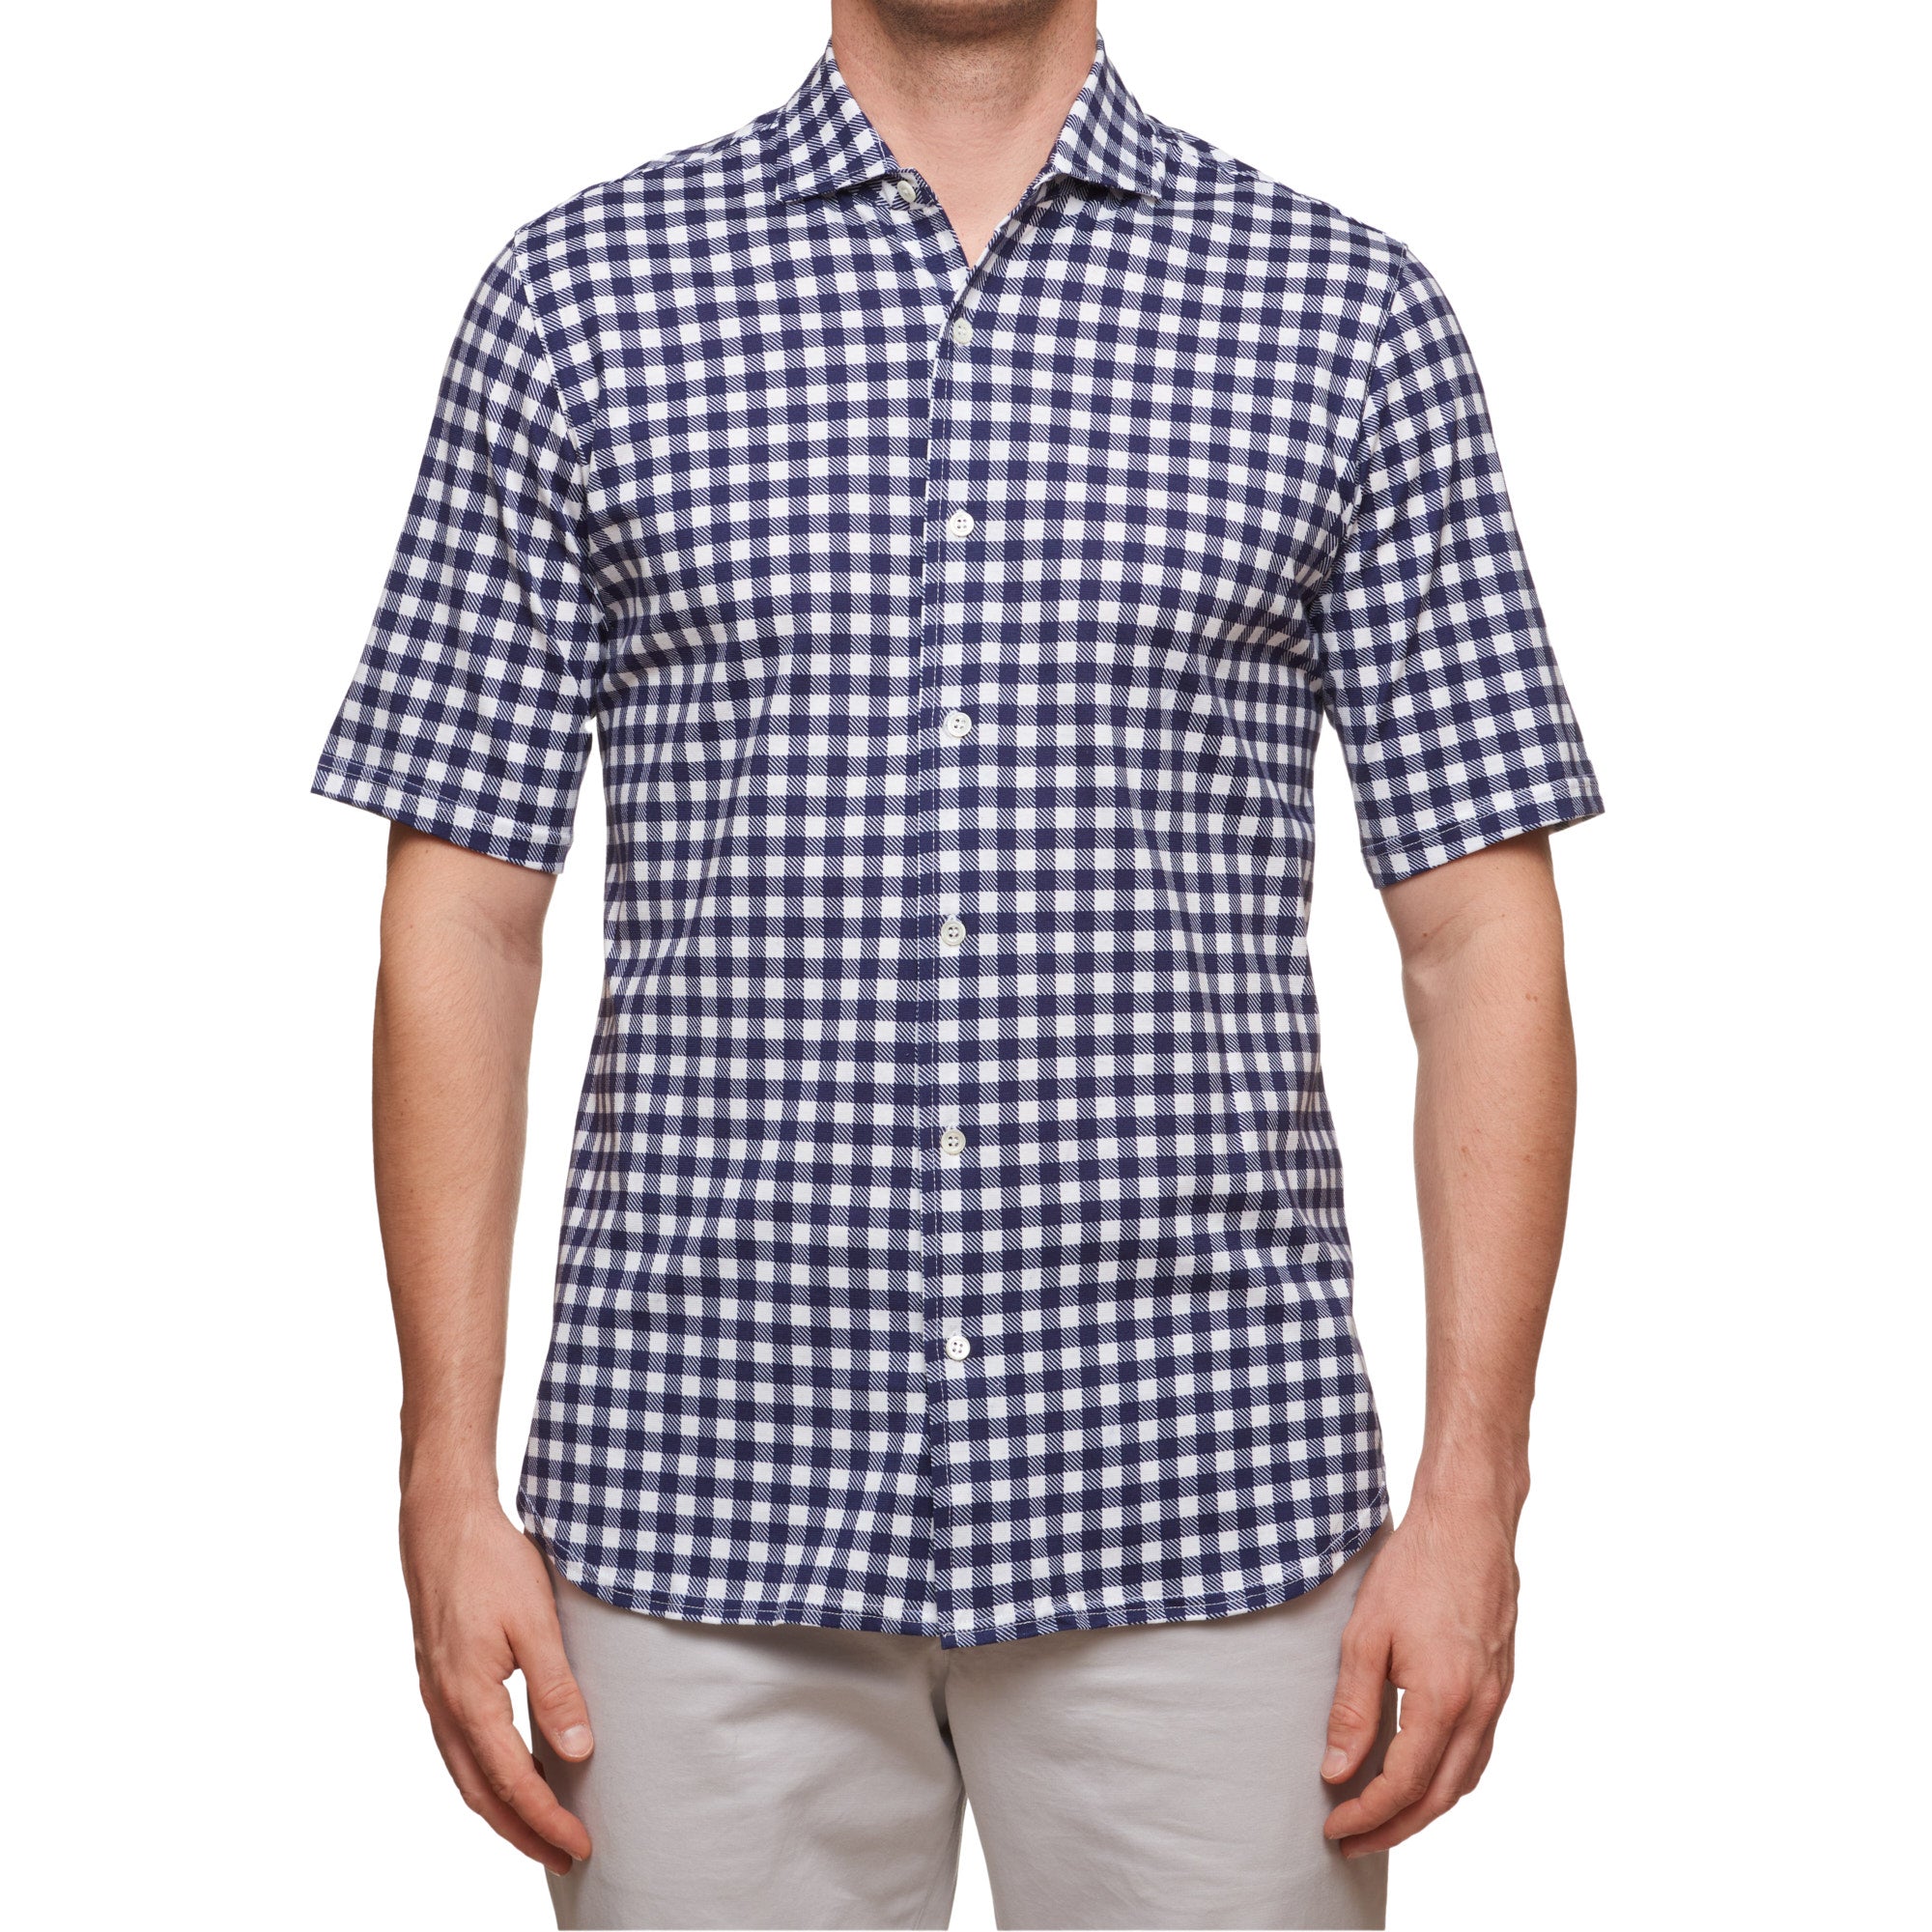 SARTORIO Napoli by KITON Blue Gingham Plaid Cotton Short Sleeve Casual Shirt NEW SARTORIO